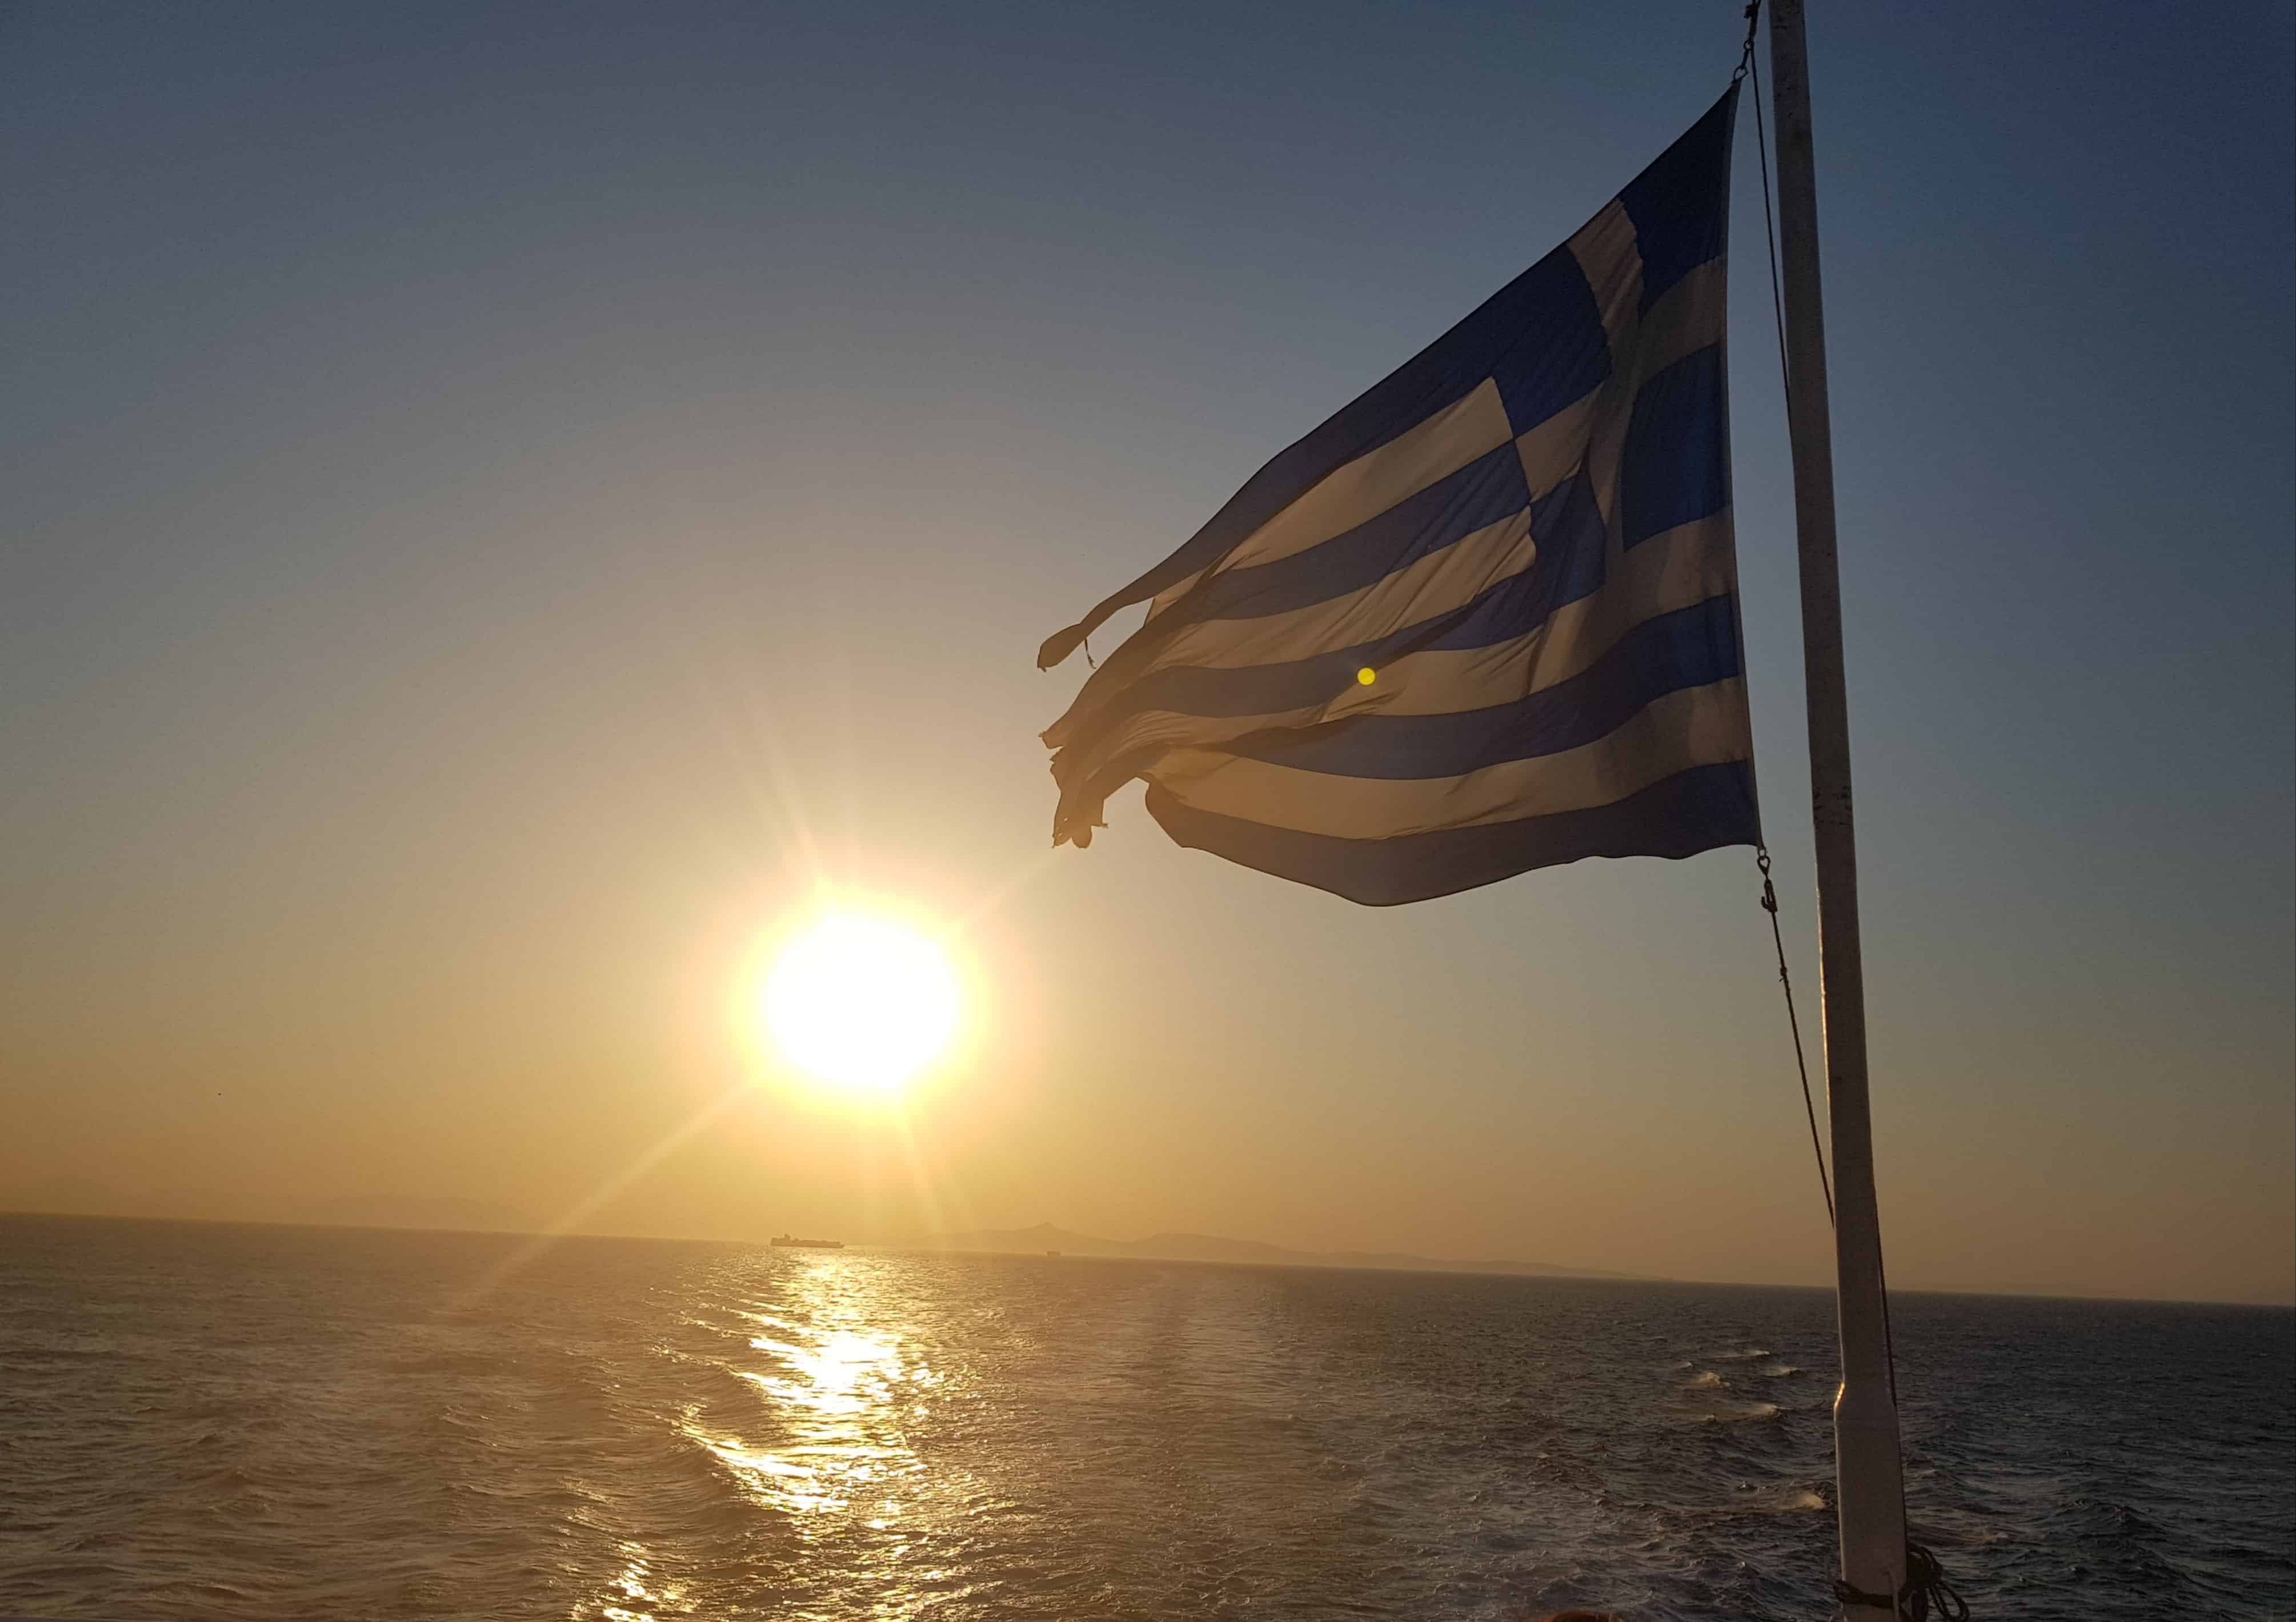 4. Aegean Sea. Credits to Klonarislo